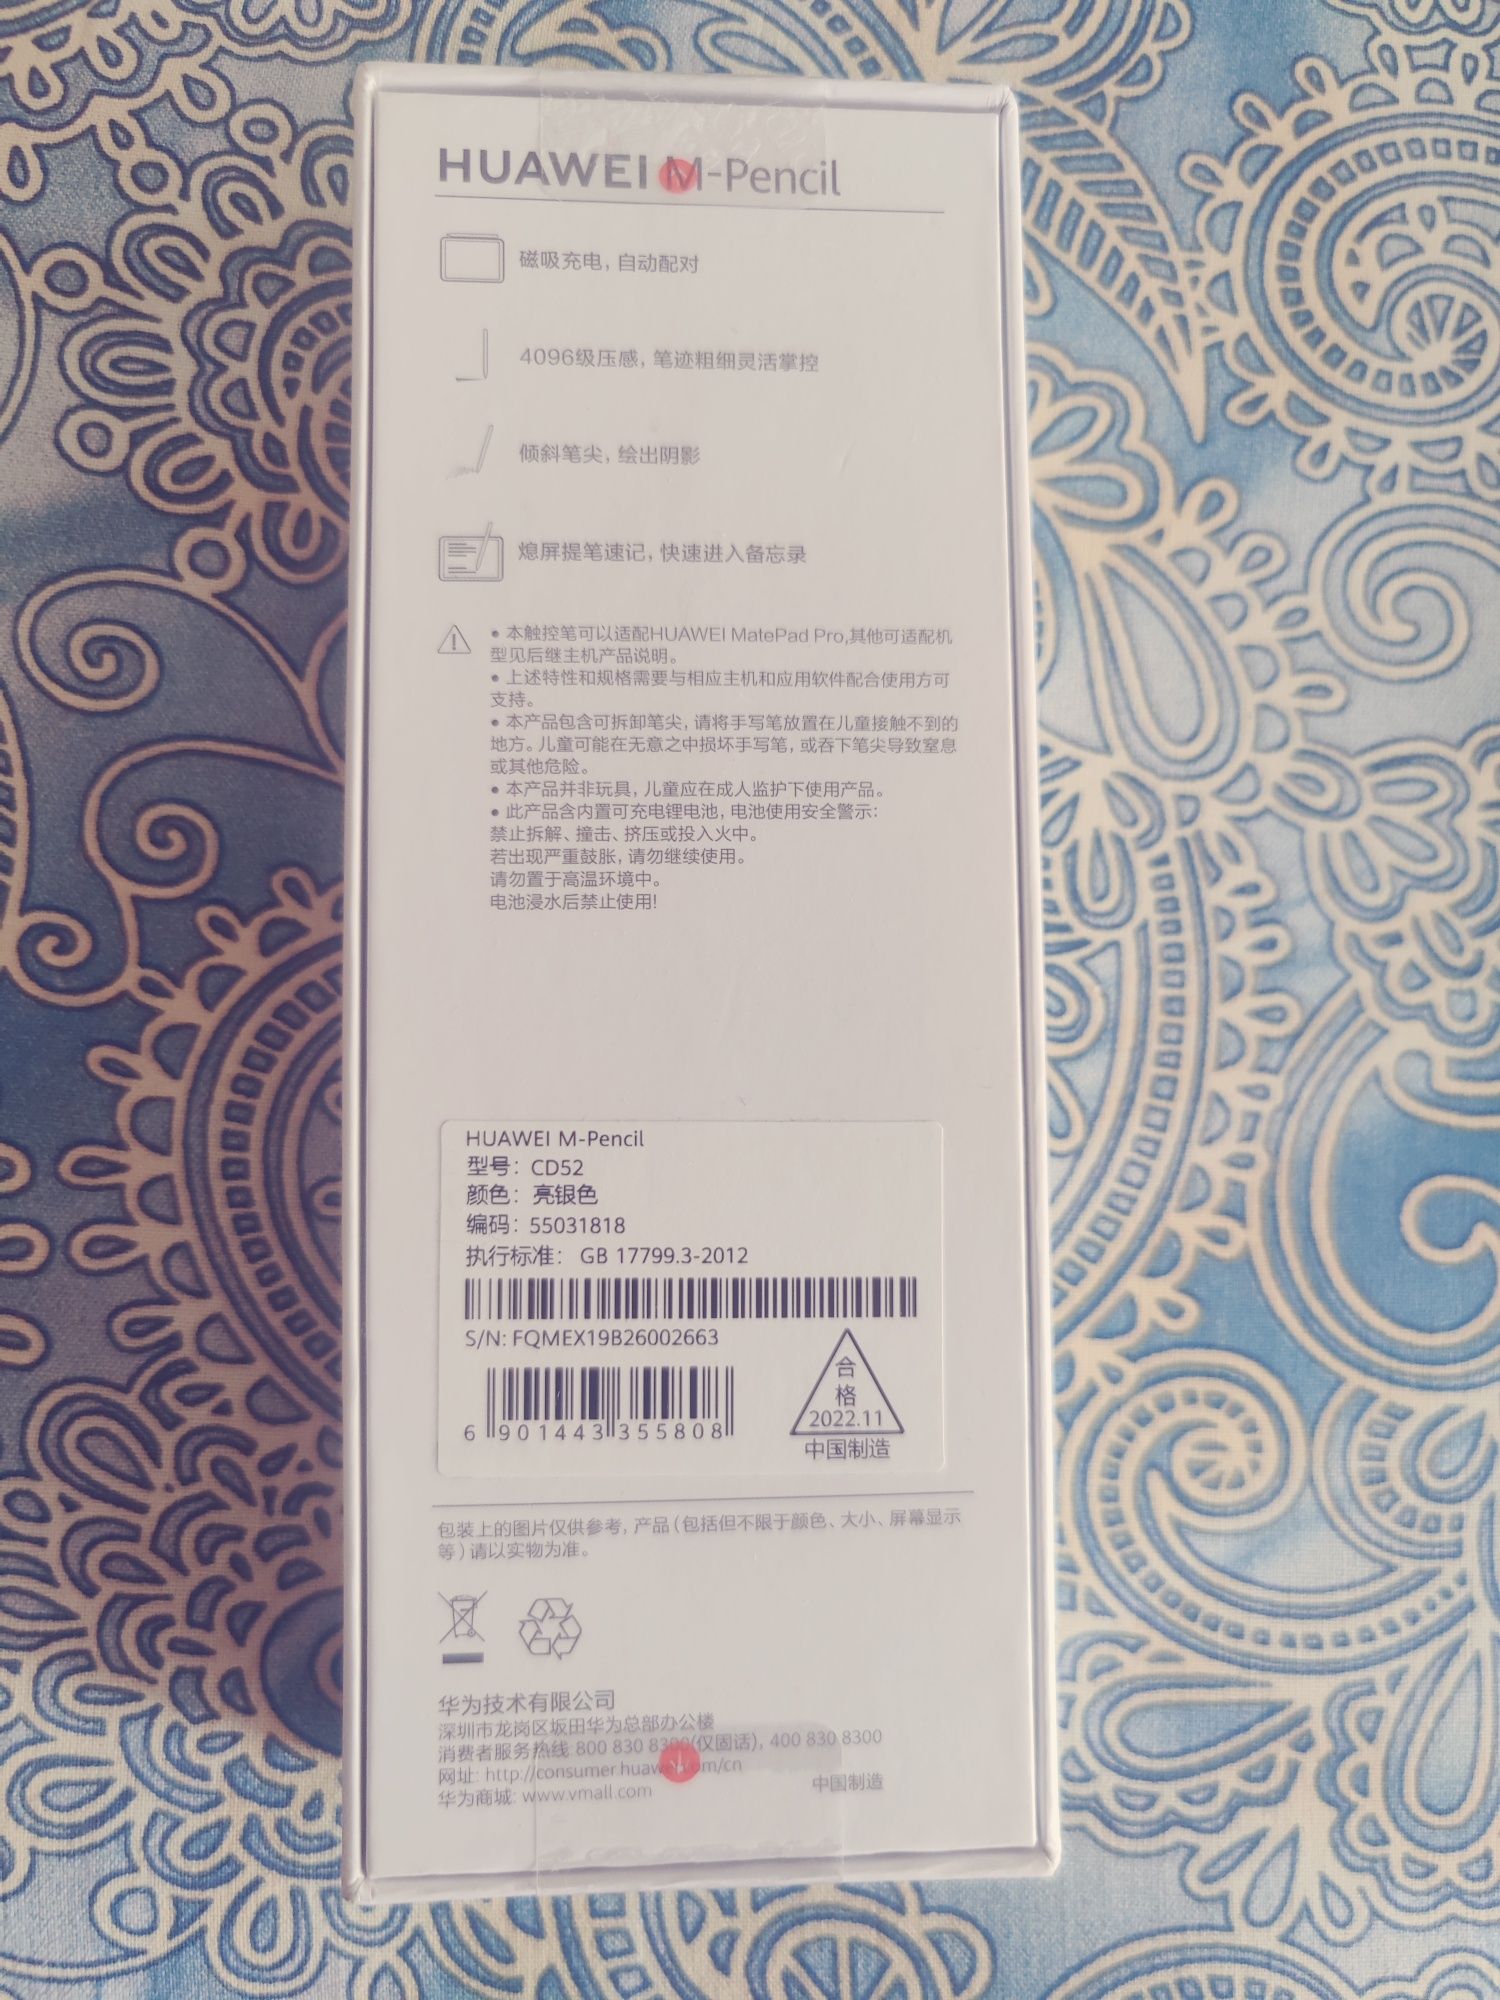 Huawei m-pencil cd-52